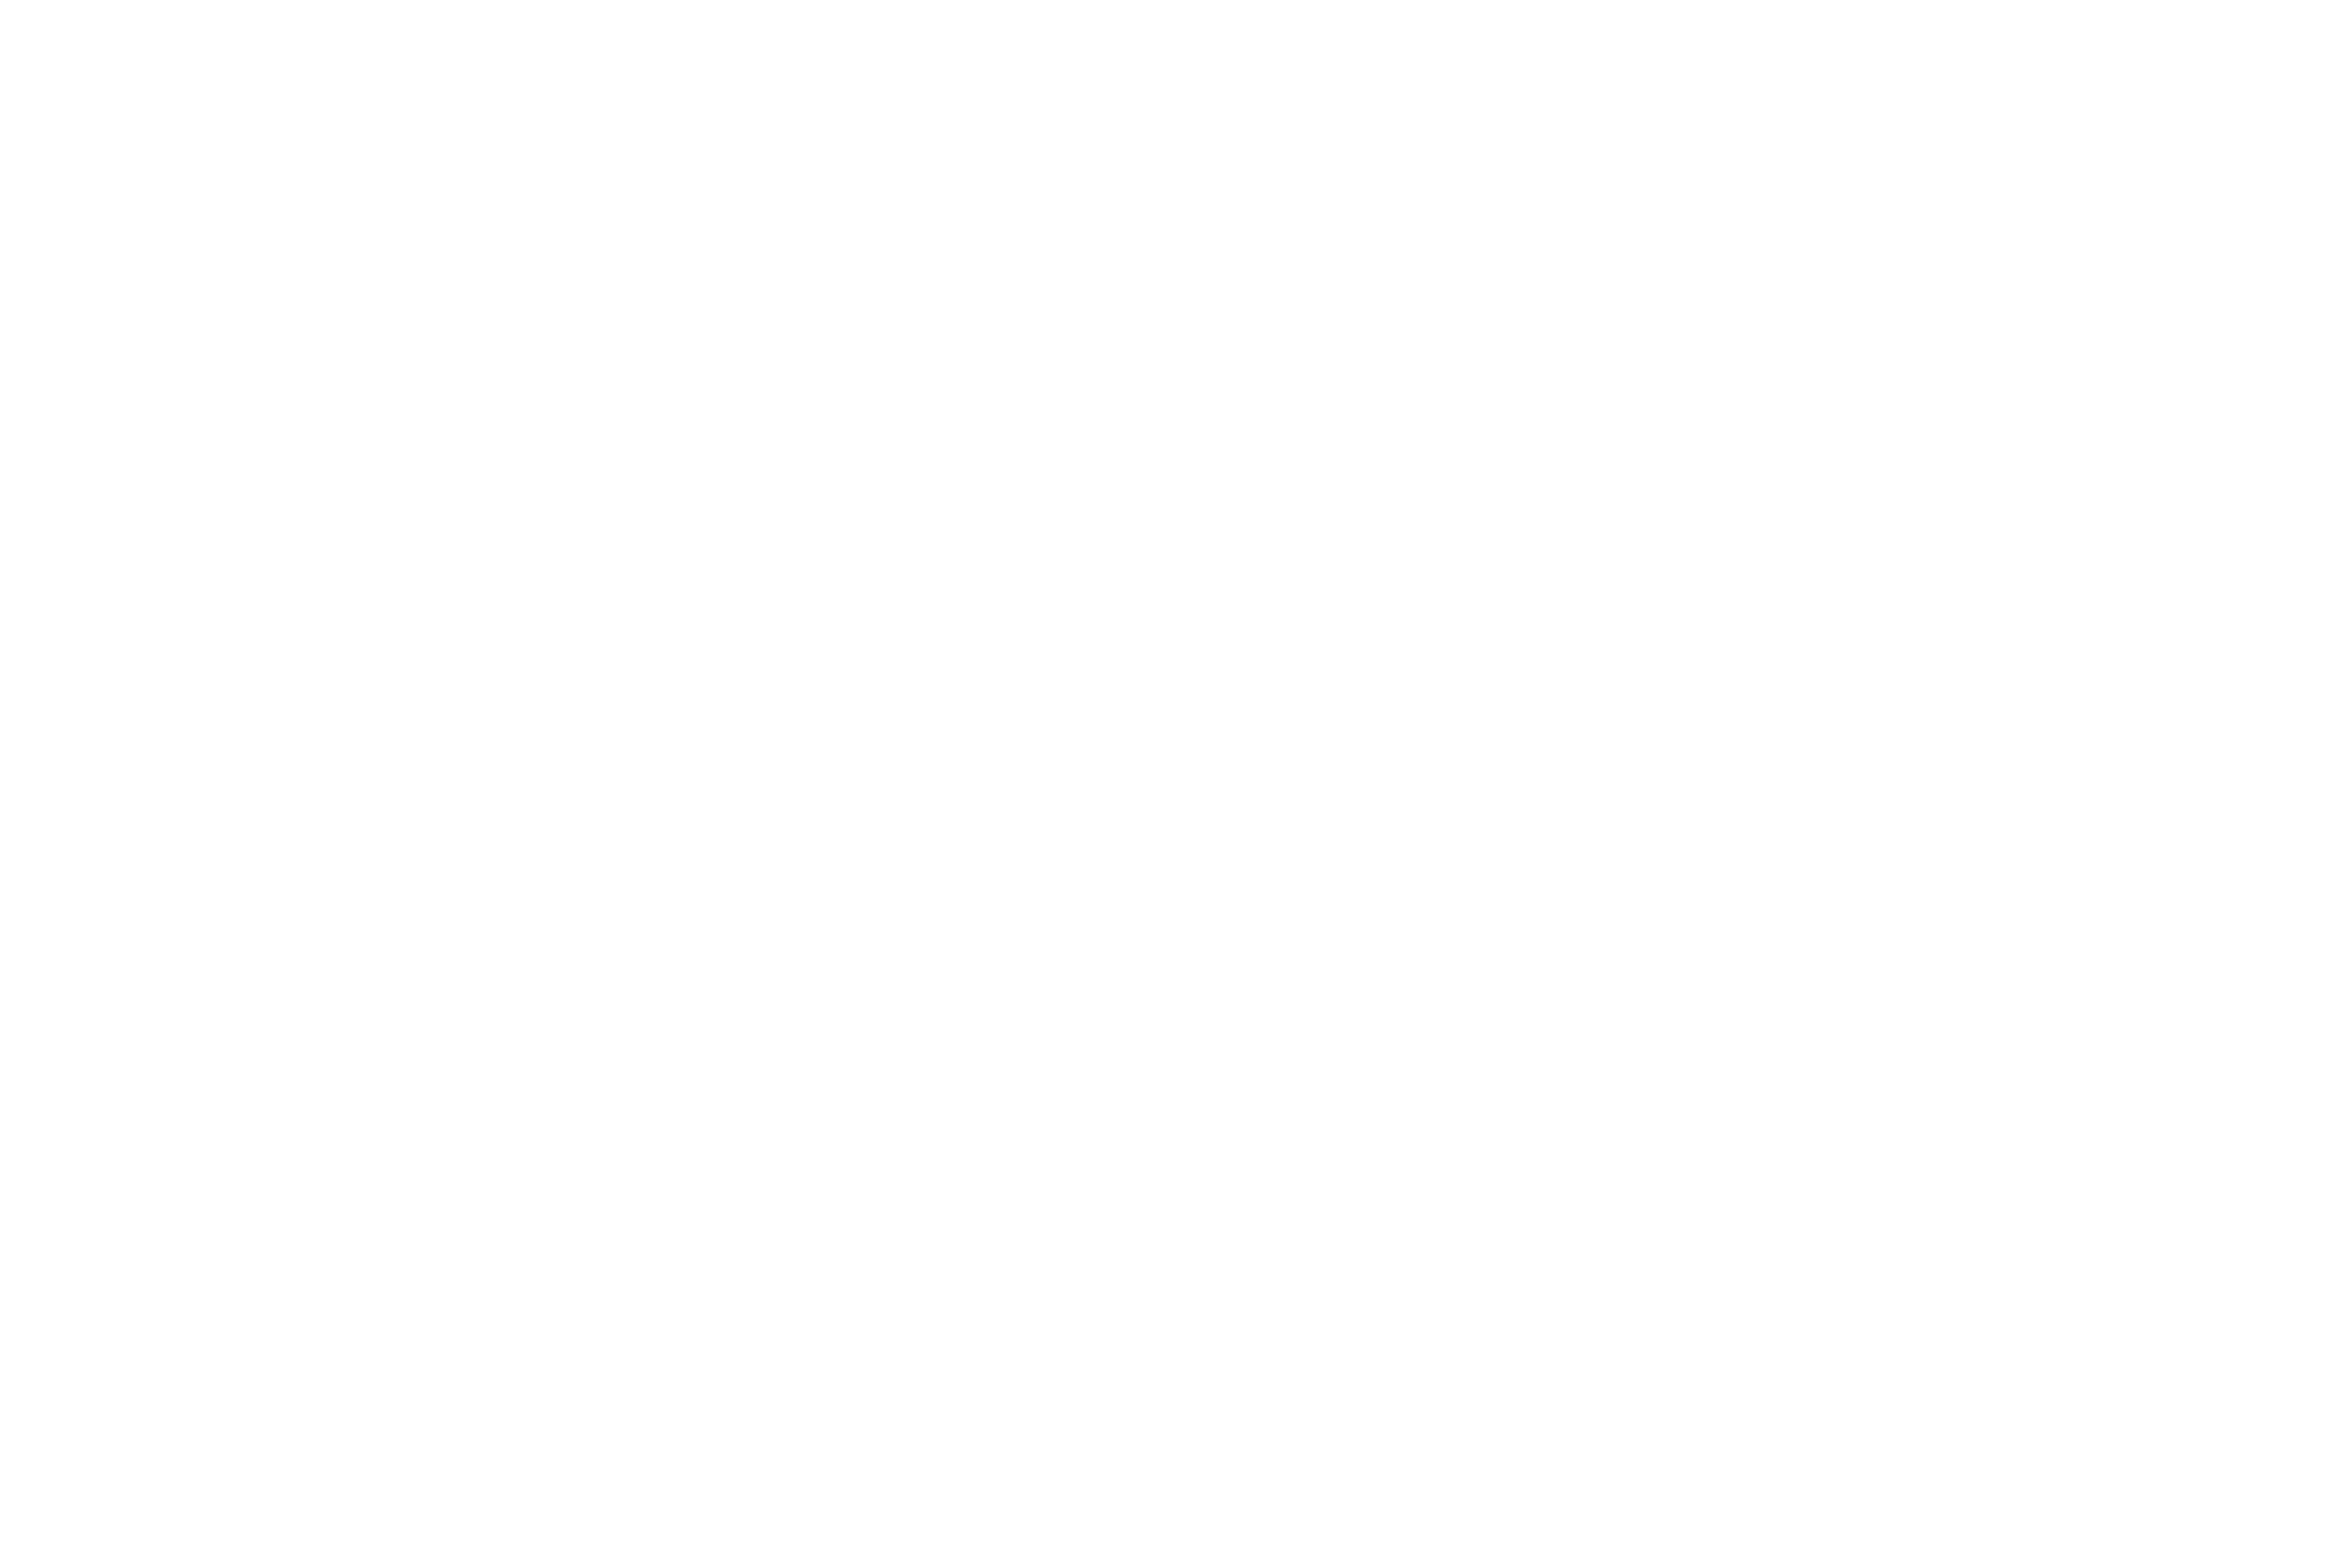 Christiaan Partridge Photography